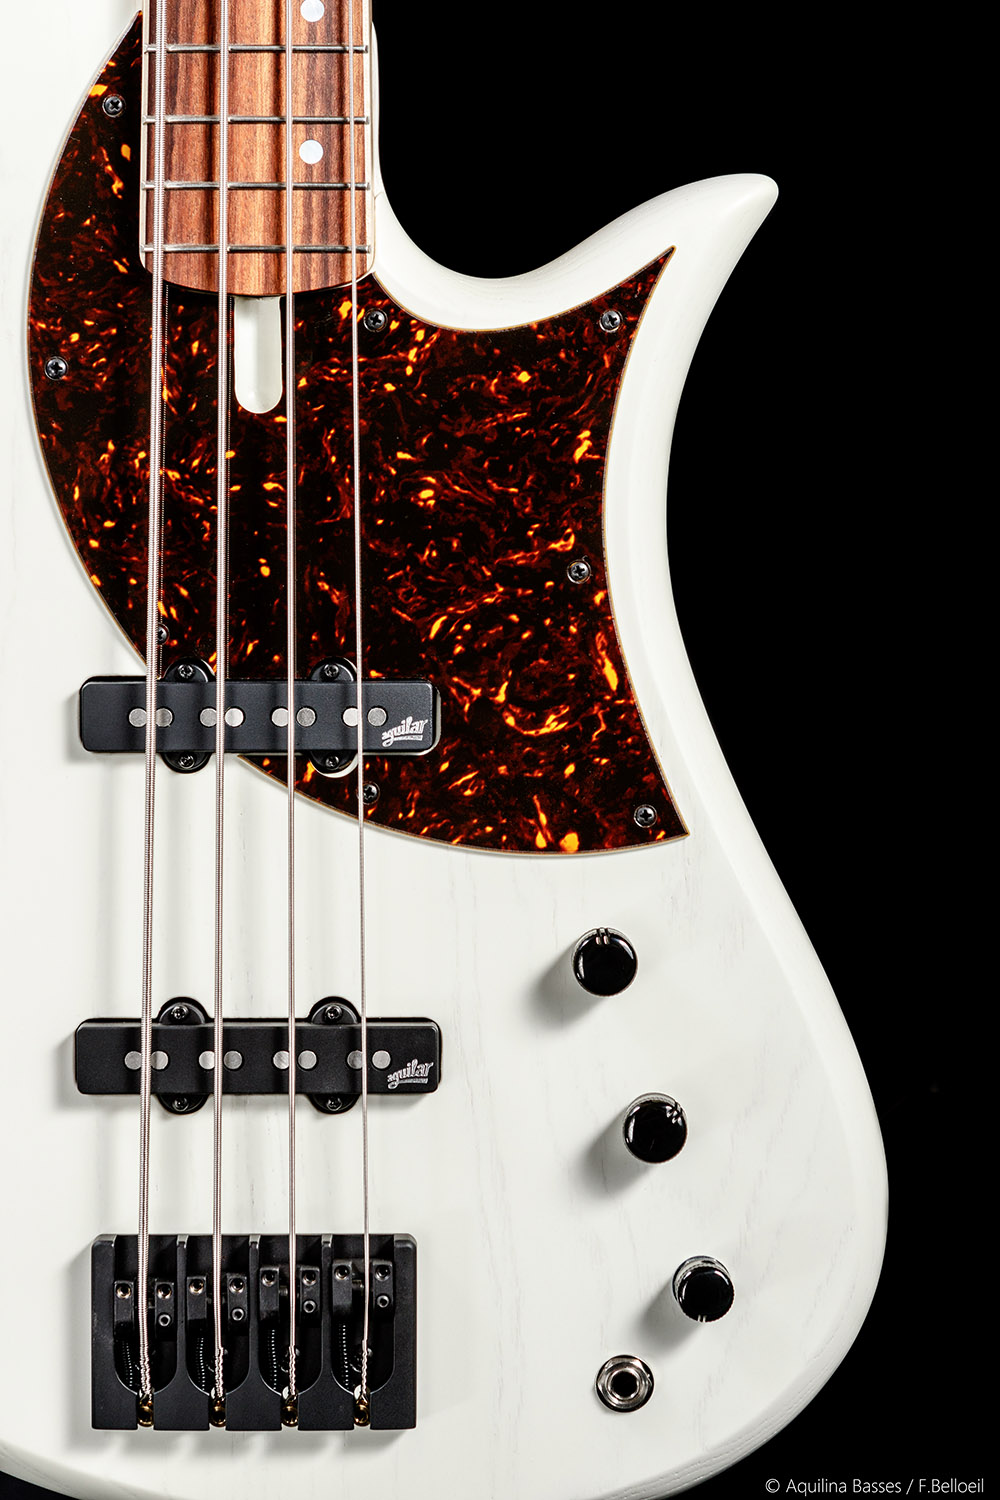 Aquilina Sirius 4 Standard Rw - White - Solidbody E-bass - Variation 5